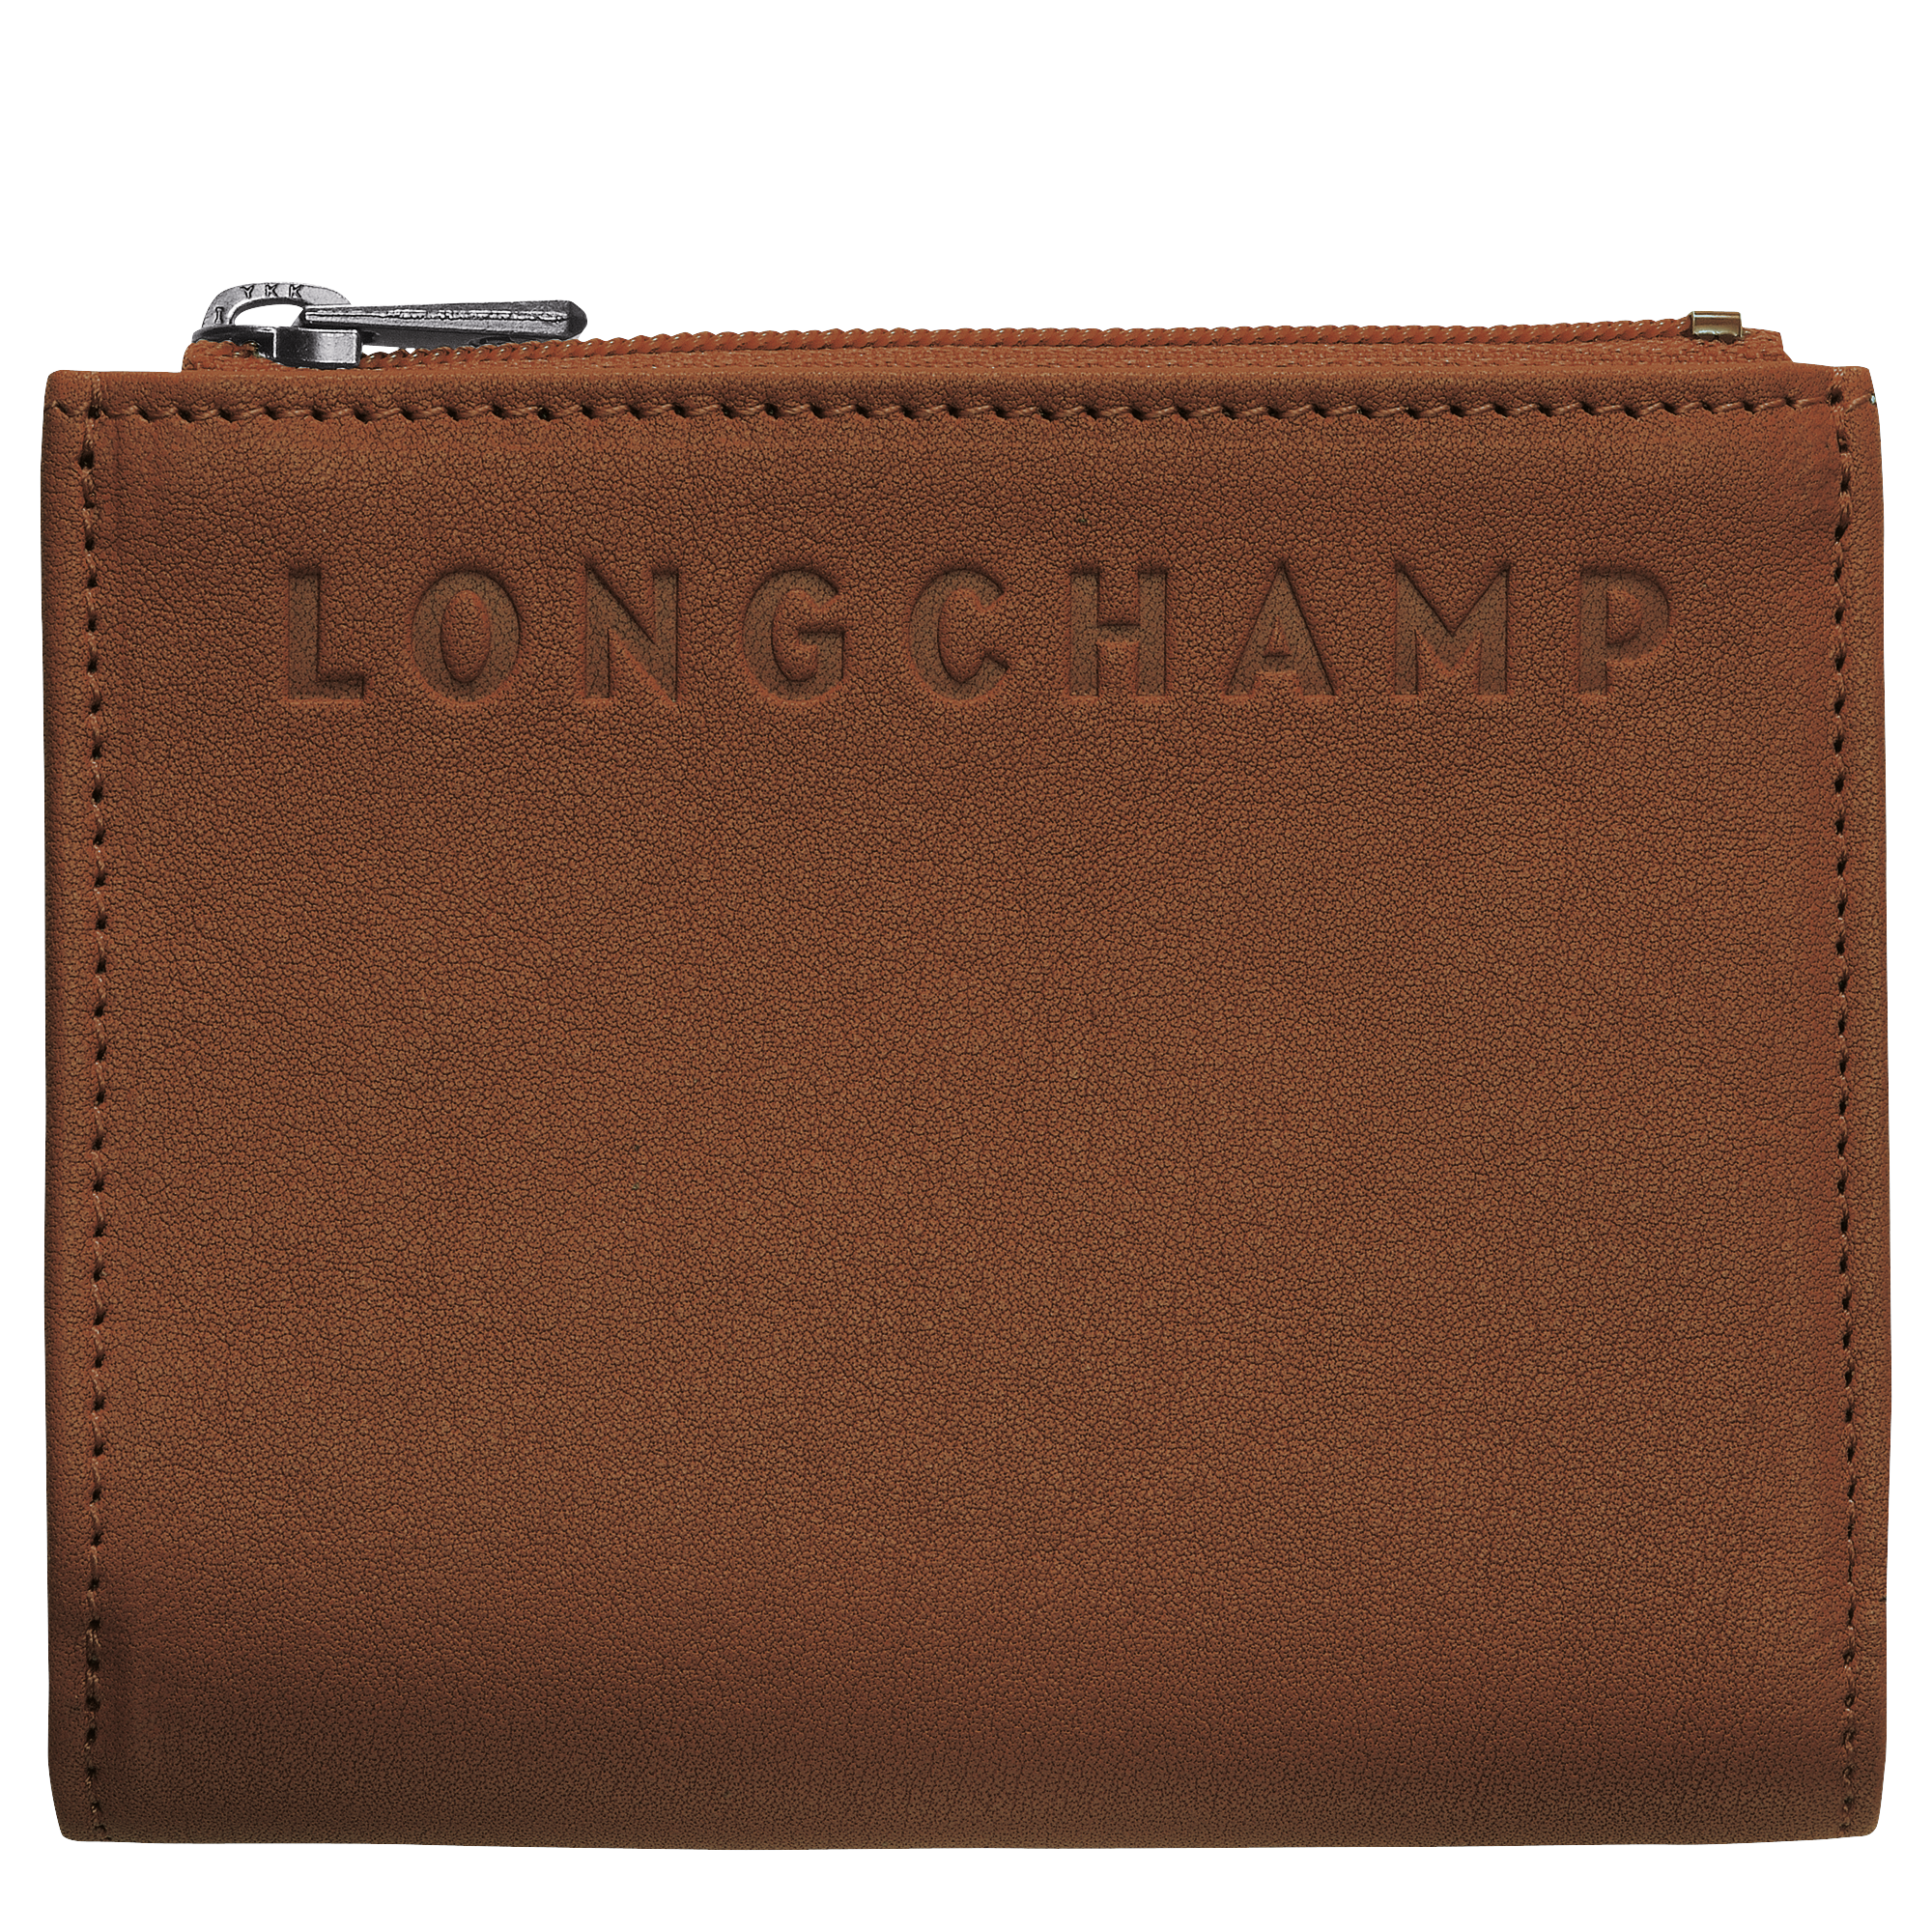 longchamp travel wallet